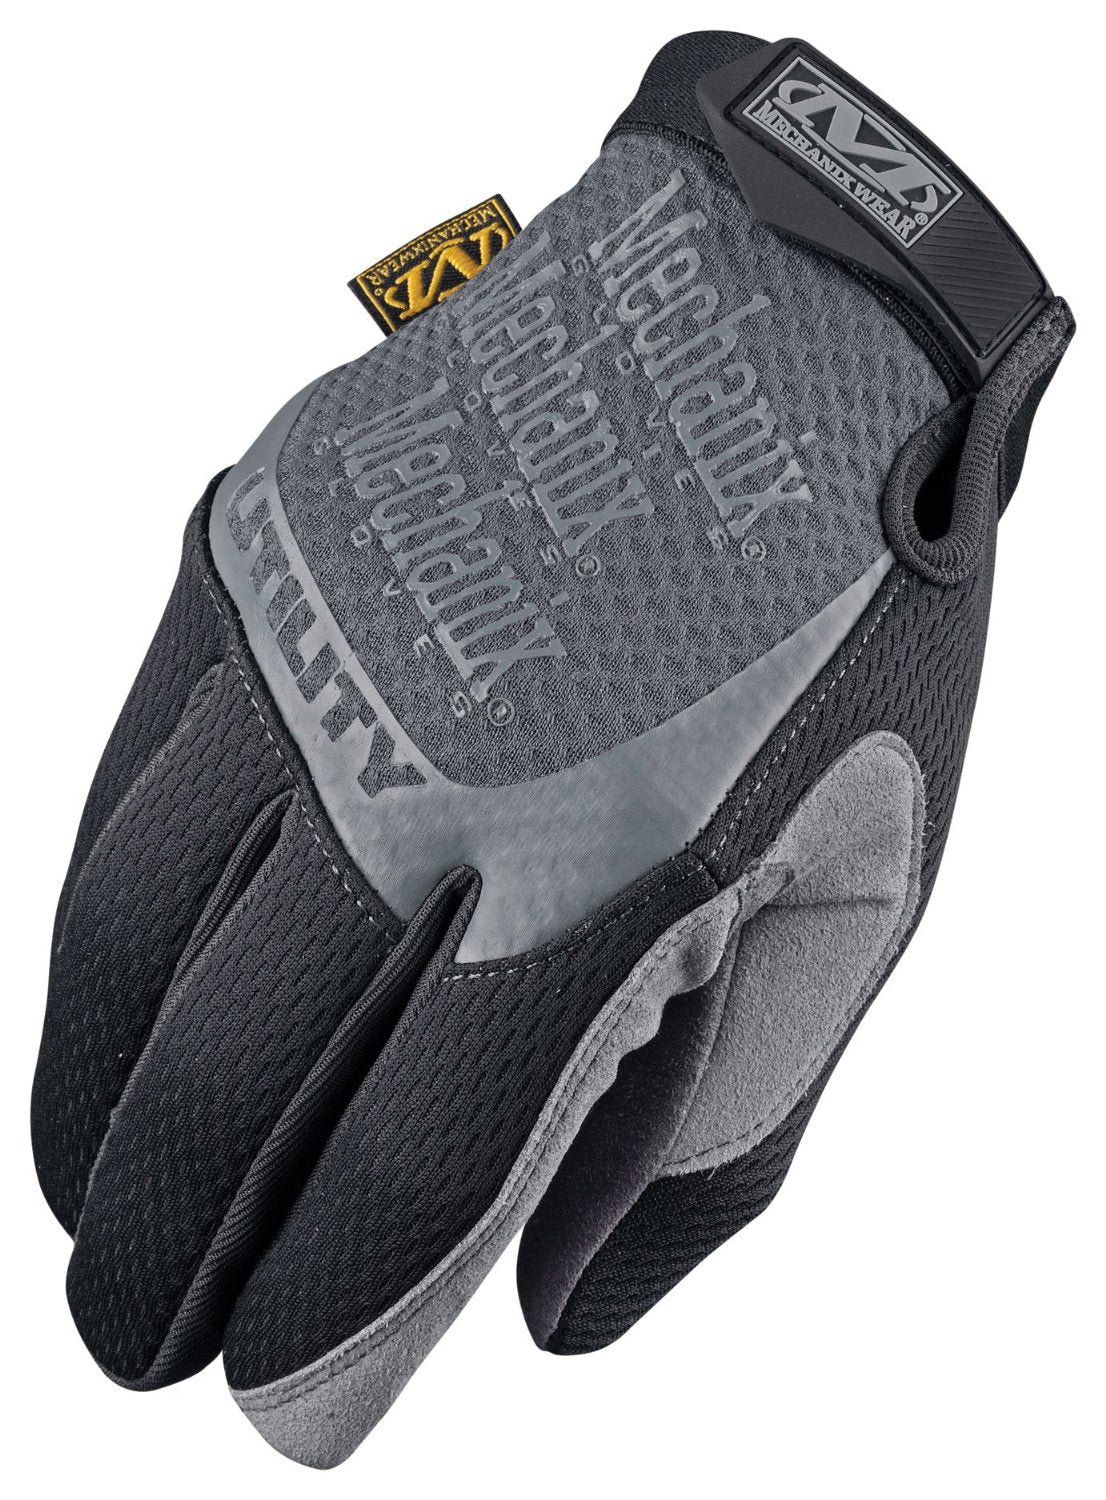 Mechanix Wear H15-05-010 All Purpose Utility Glove, Black, Large